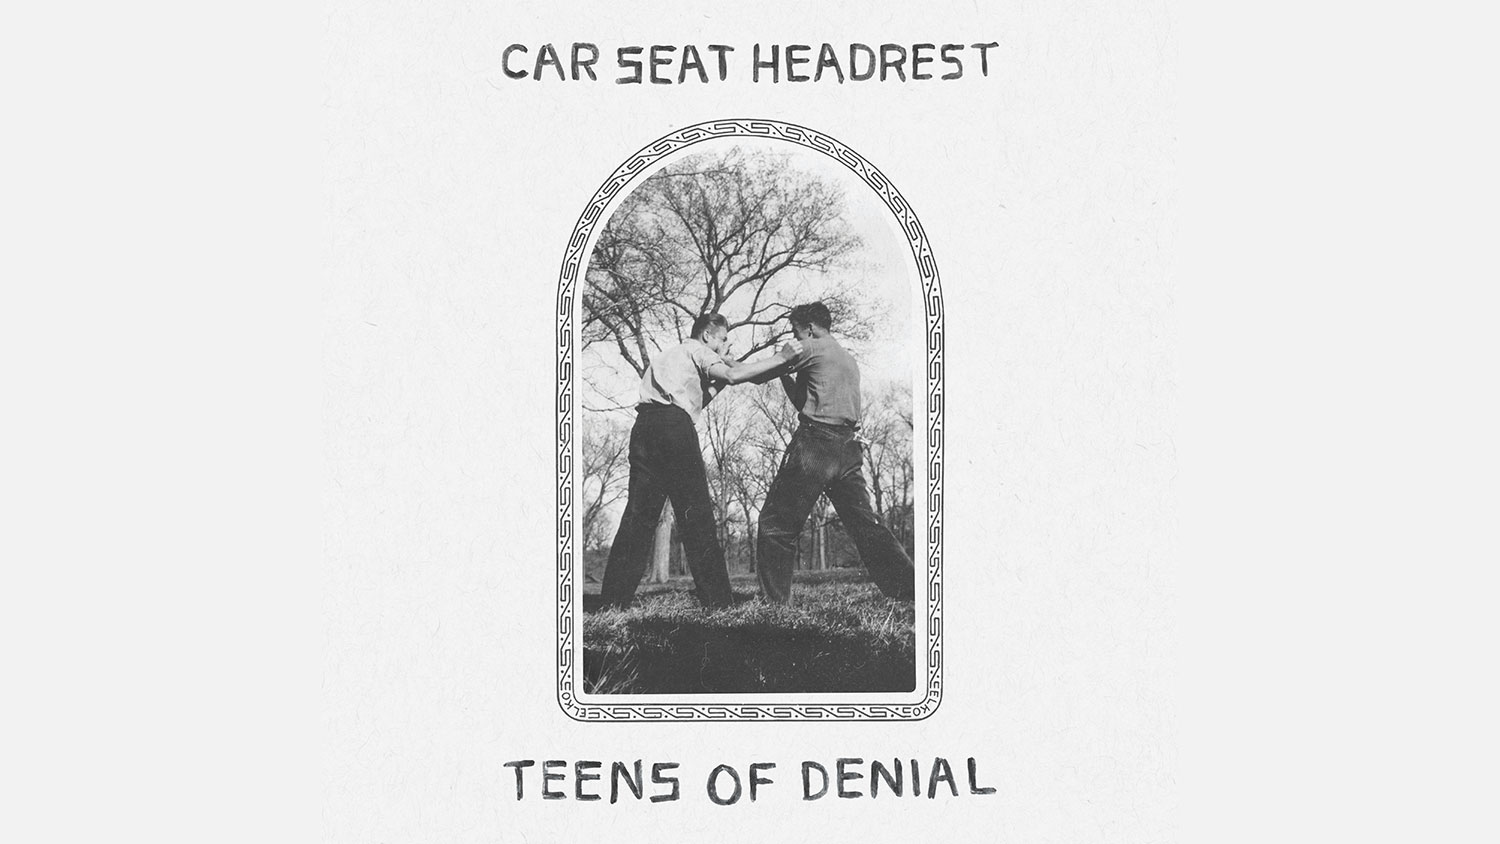 digital trends best albums of 2016 so far teens denial  car seat headrest